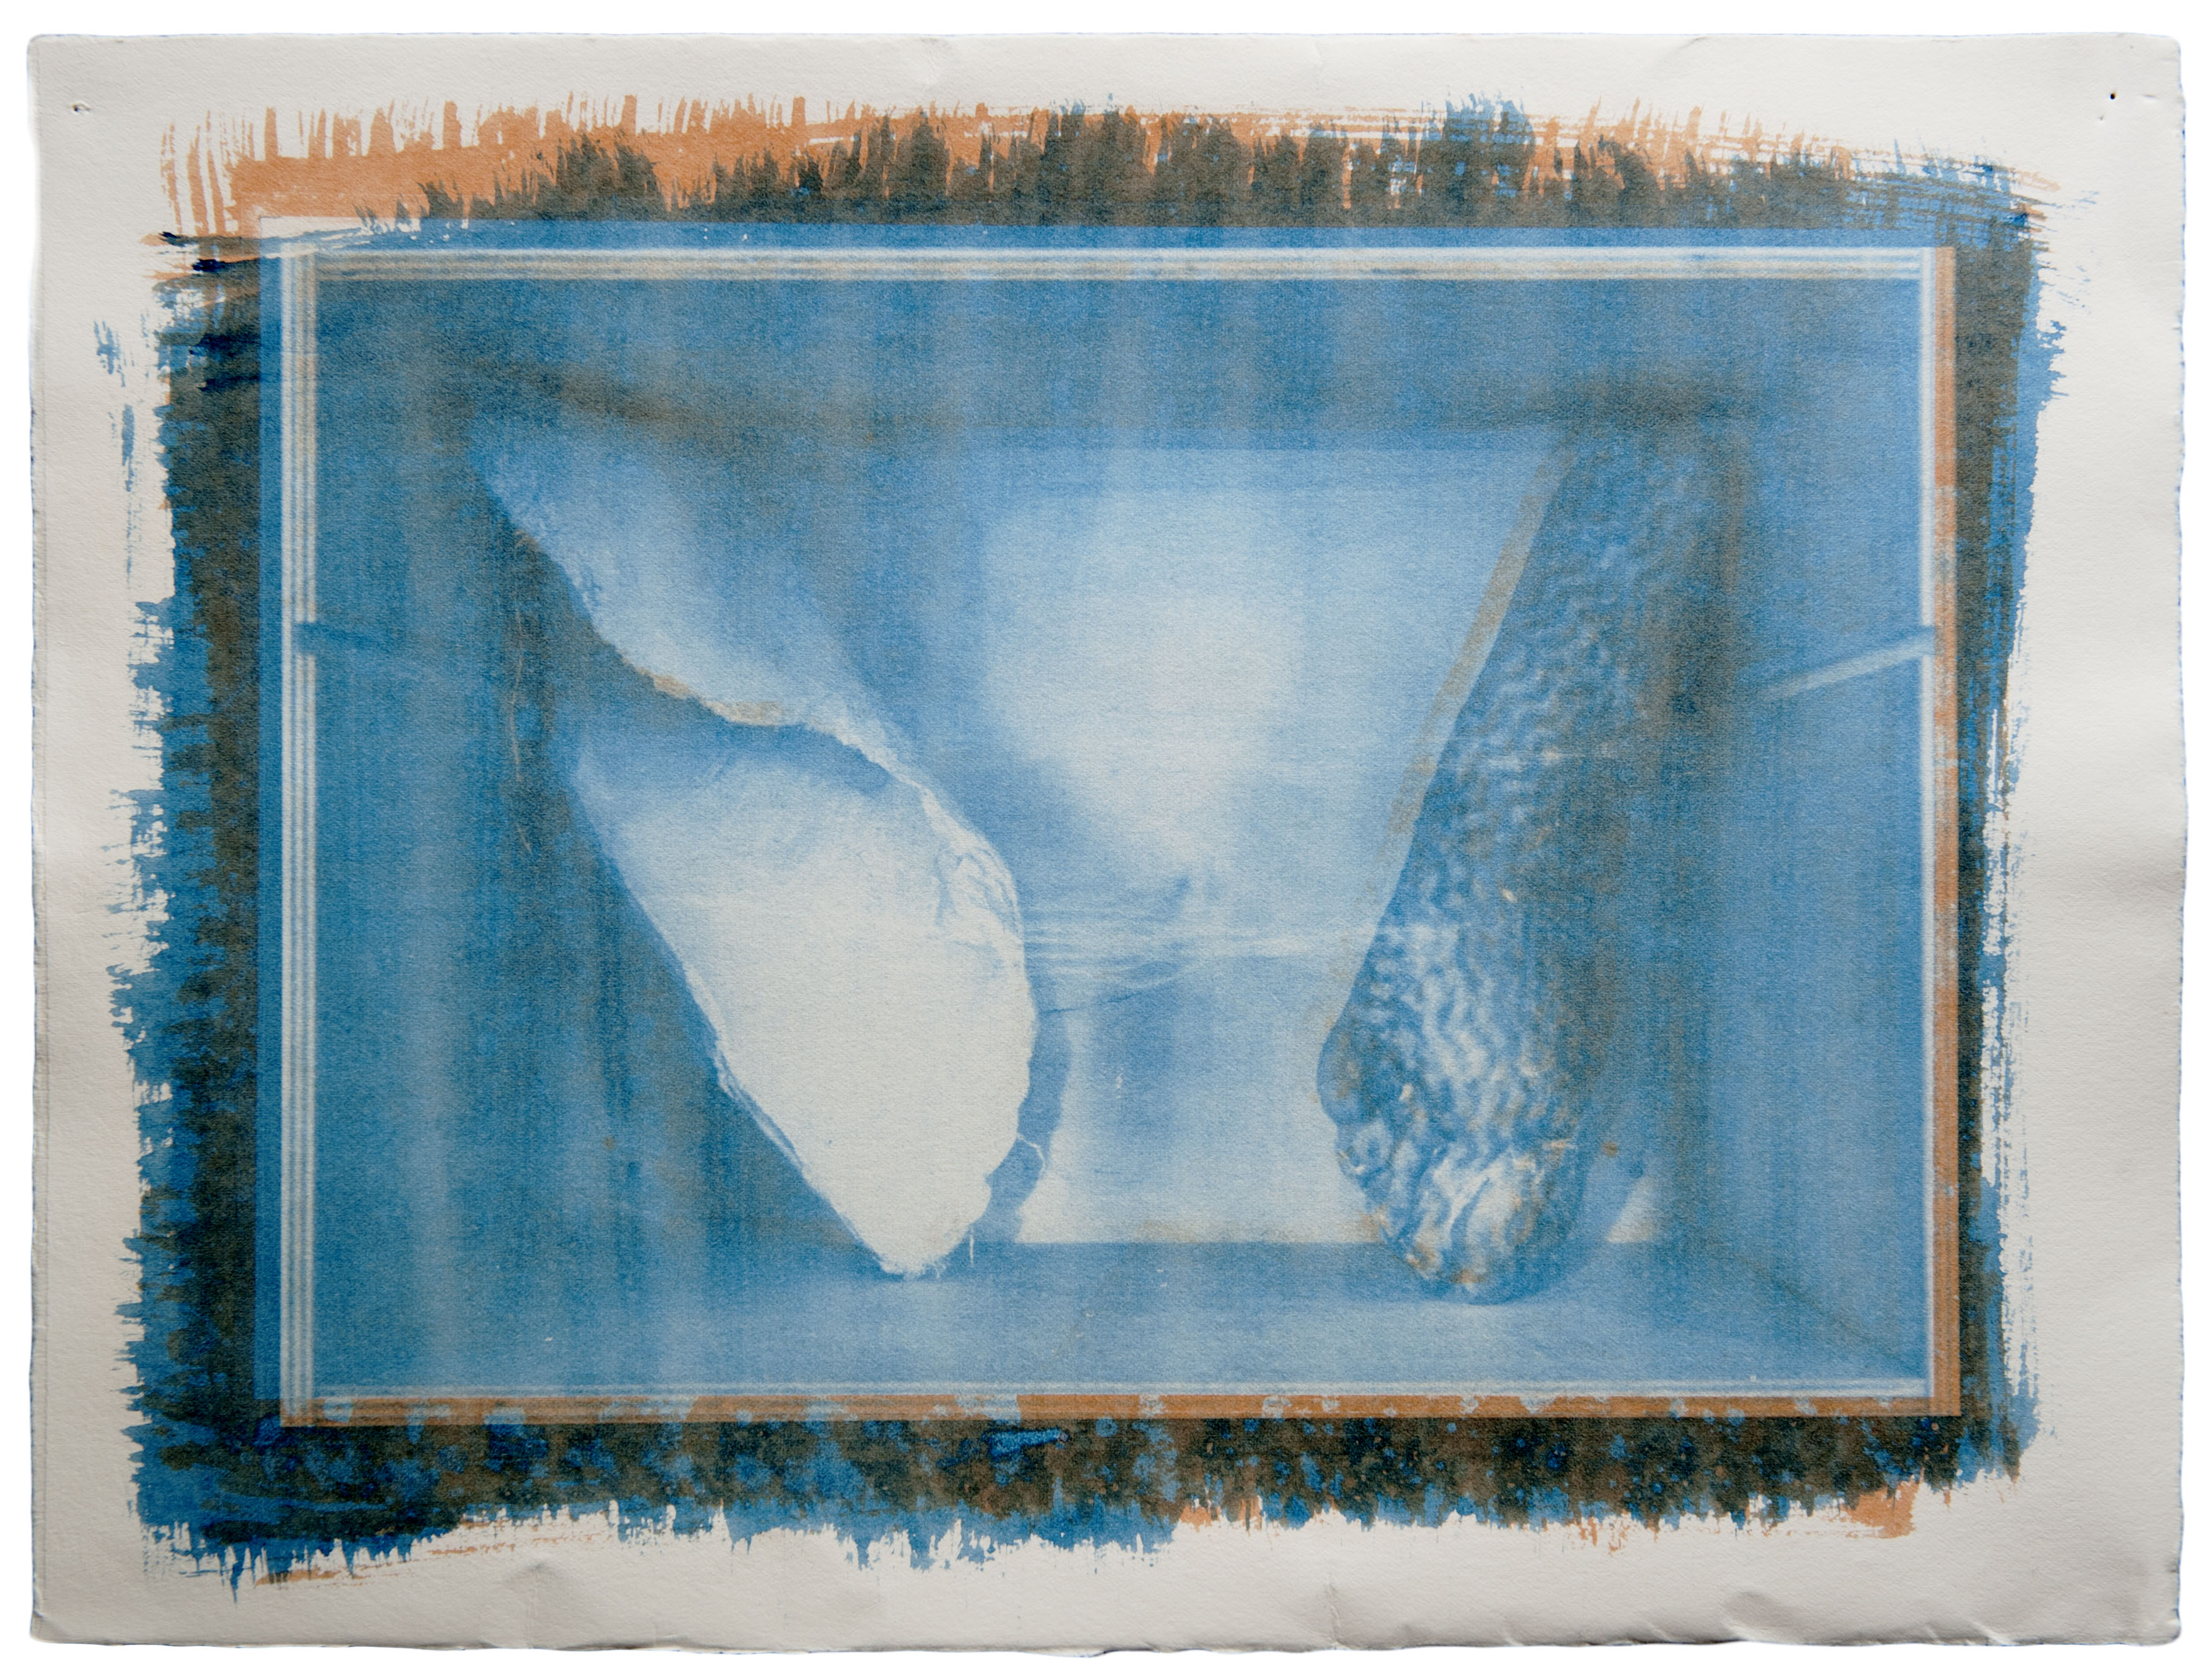 Soyoun Kim, 'Cabinet of curiosities of identity', 2011, Gum bichromate print, 28 x 38cm. Image courtesy the artist.